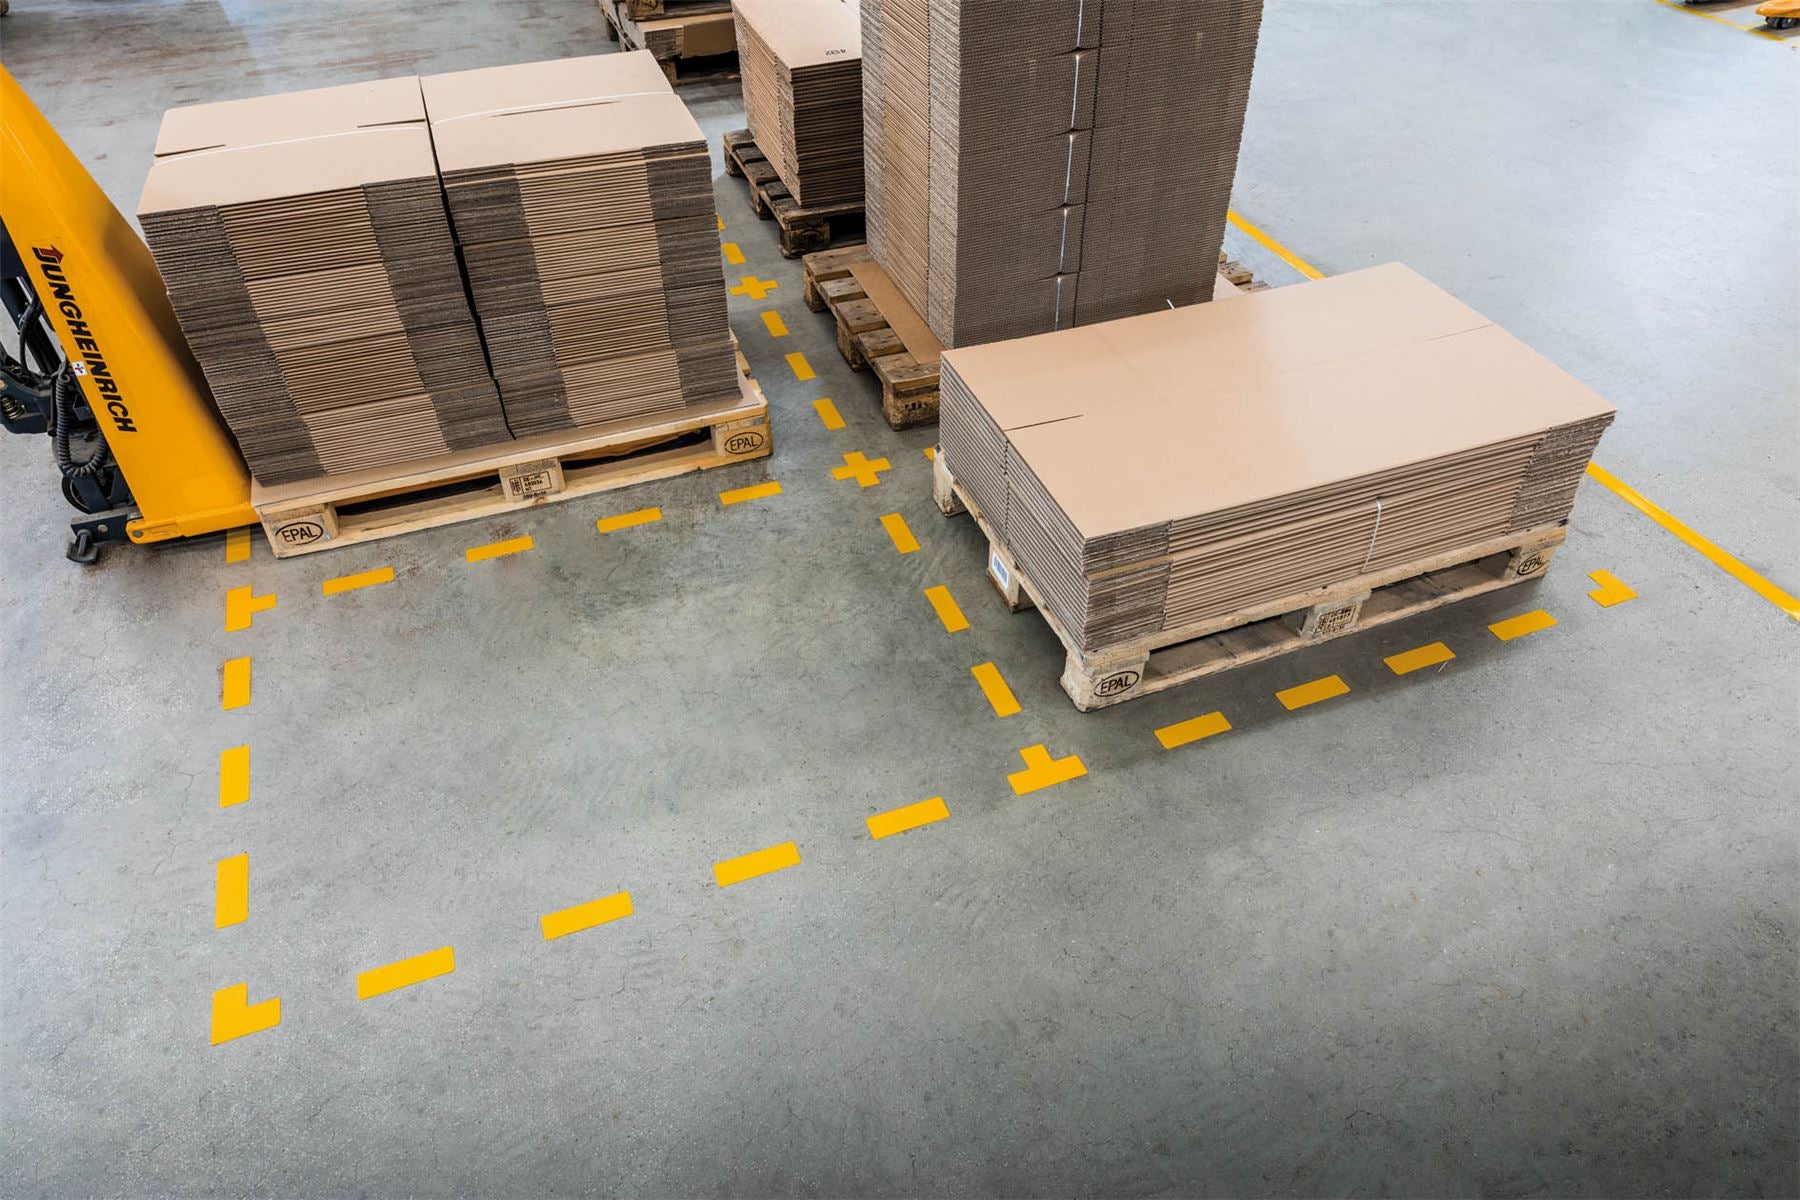 Durable Heavy Duty Adhesive Floor Marking Cross Shape | 10 Pack | Yellow